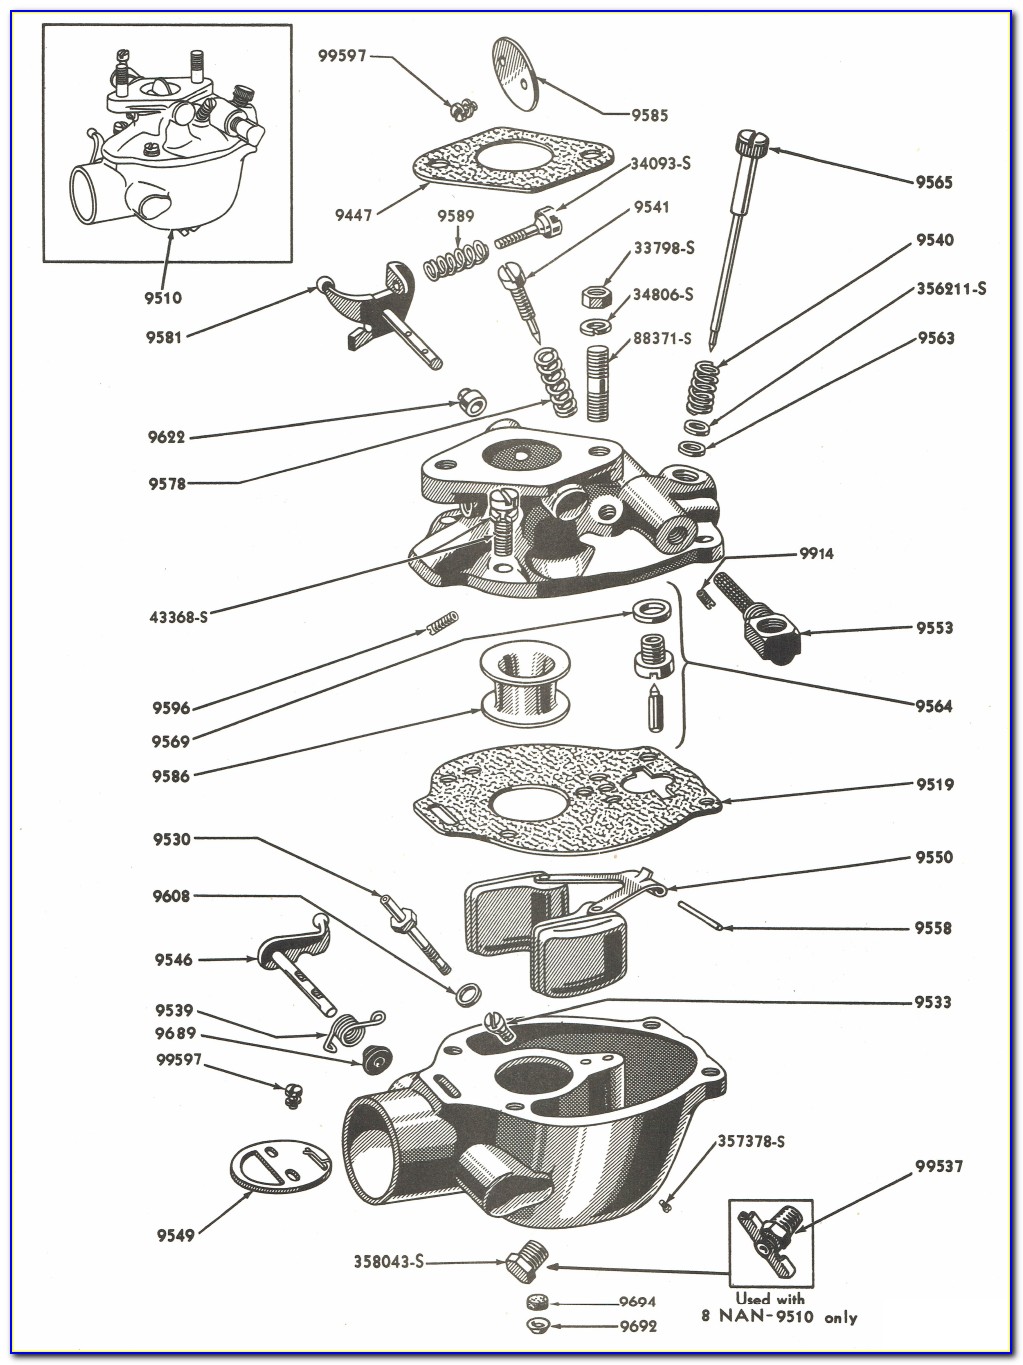 Marvel Schebler Tsx 33 Carburetor Diagram